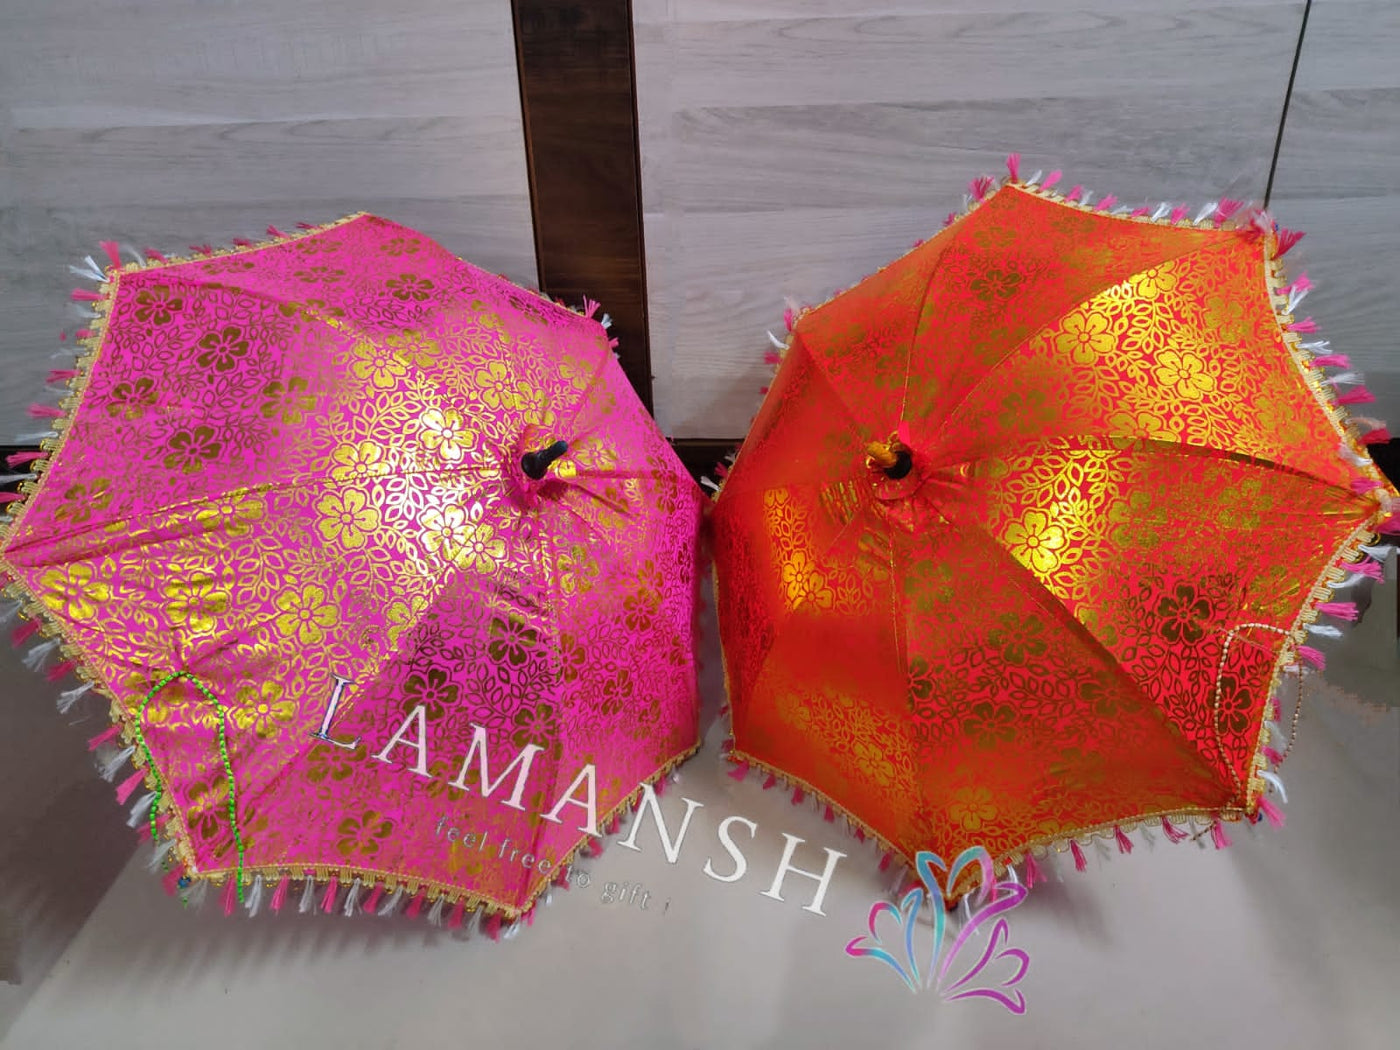 LAMANSH Orange - Pink / Cotton / 2 LAMANSH® ( Pack of 2) Handicrafts and Beautiful Jaipuri Print Handmade Embroidery Work Umbrella Useful for Party Decoration, Home Decor, Pre Wedding